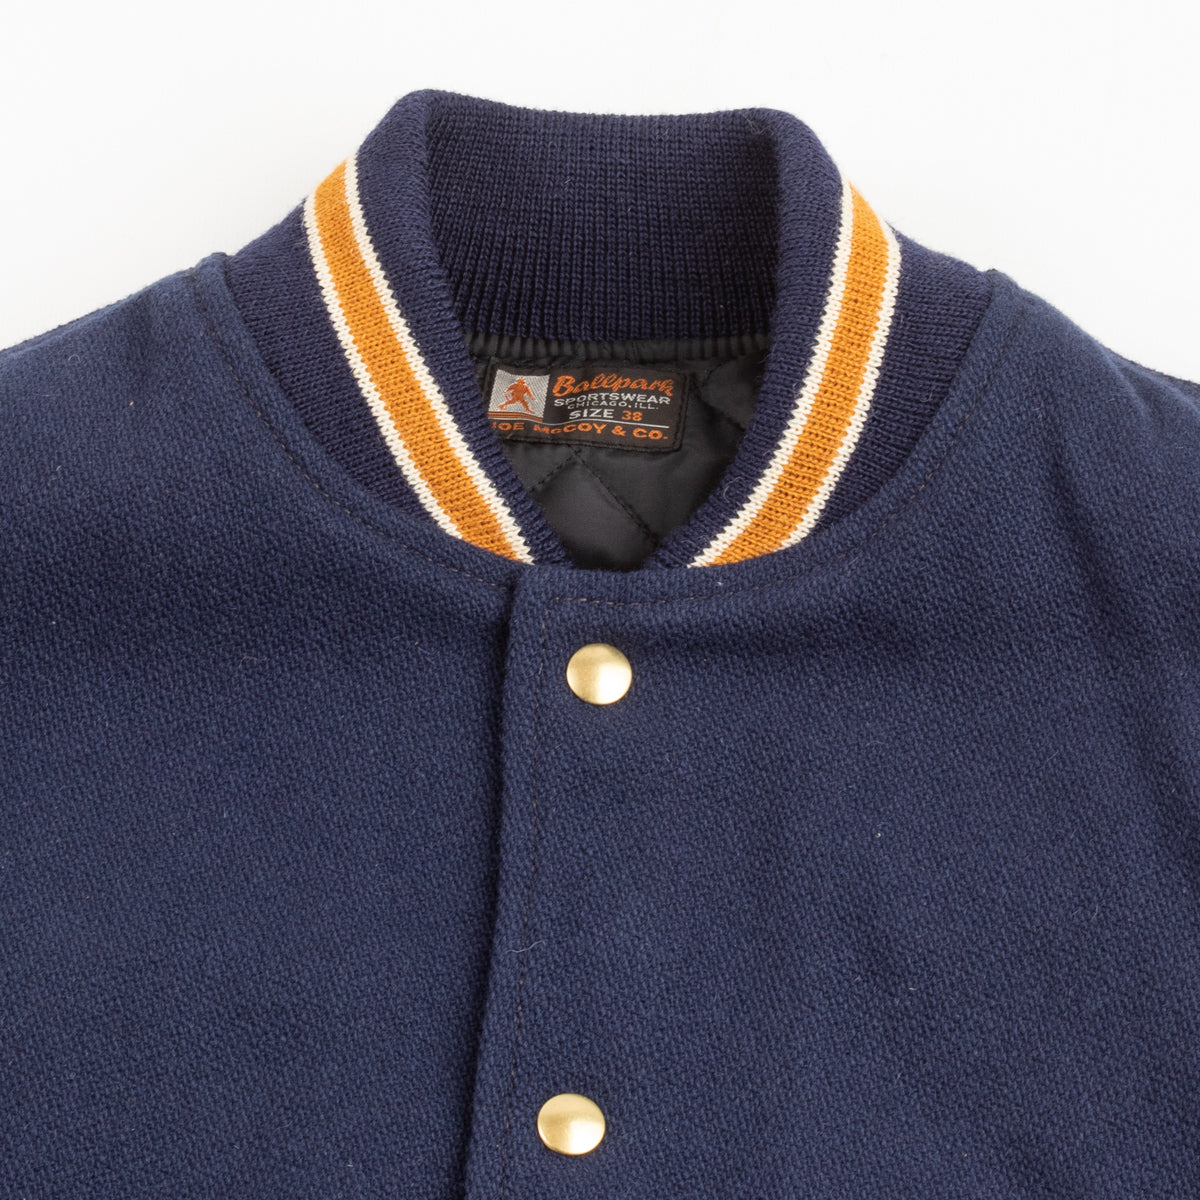 The Real McCoy's Wool Varsity Jacket - Midnight Blue - Standard